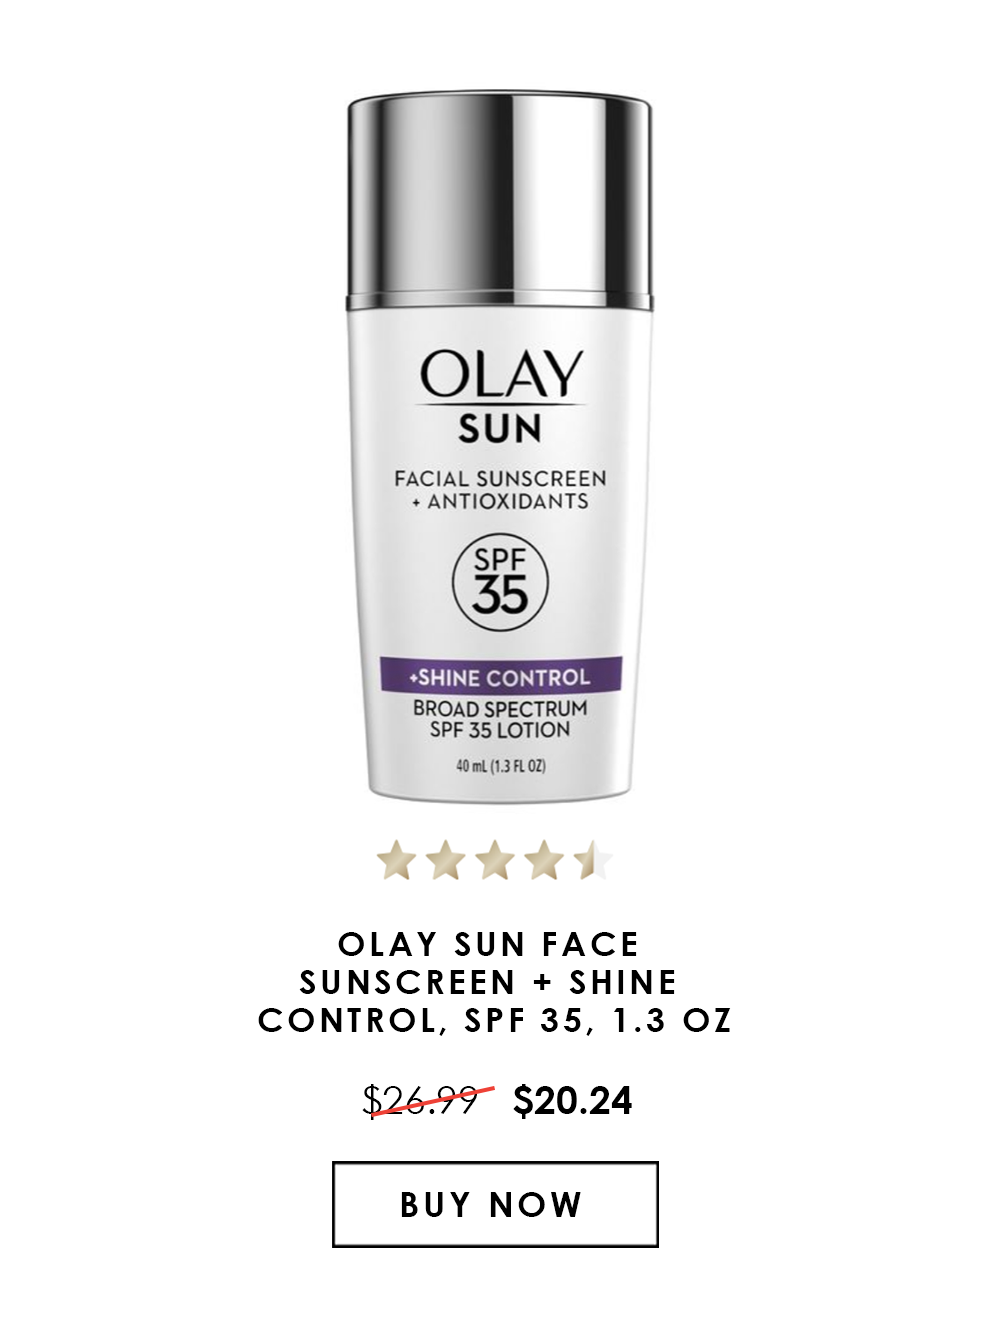 25% off Olay Sun Face Sunscreen + Shine Control. SPF 35